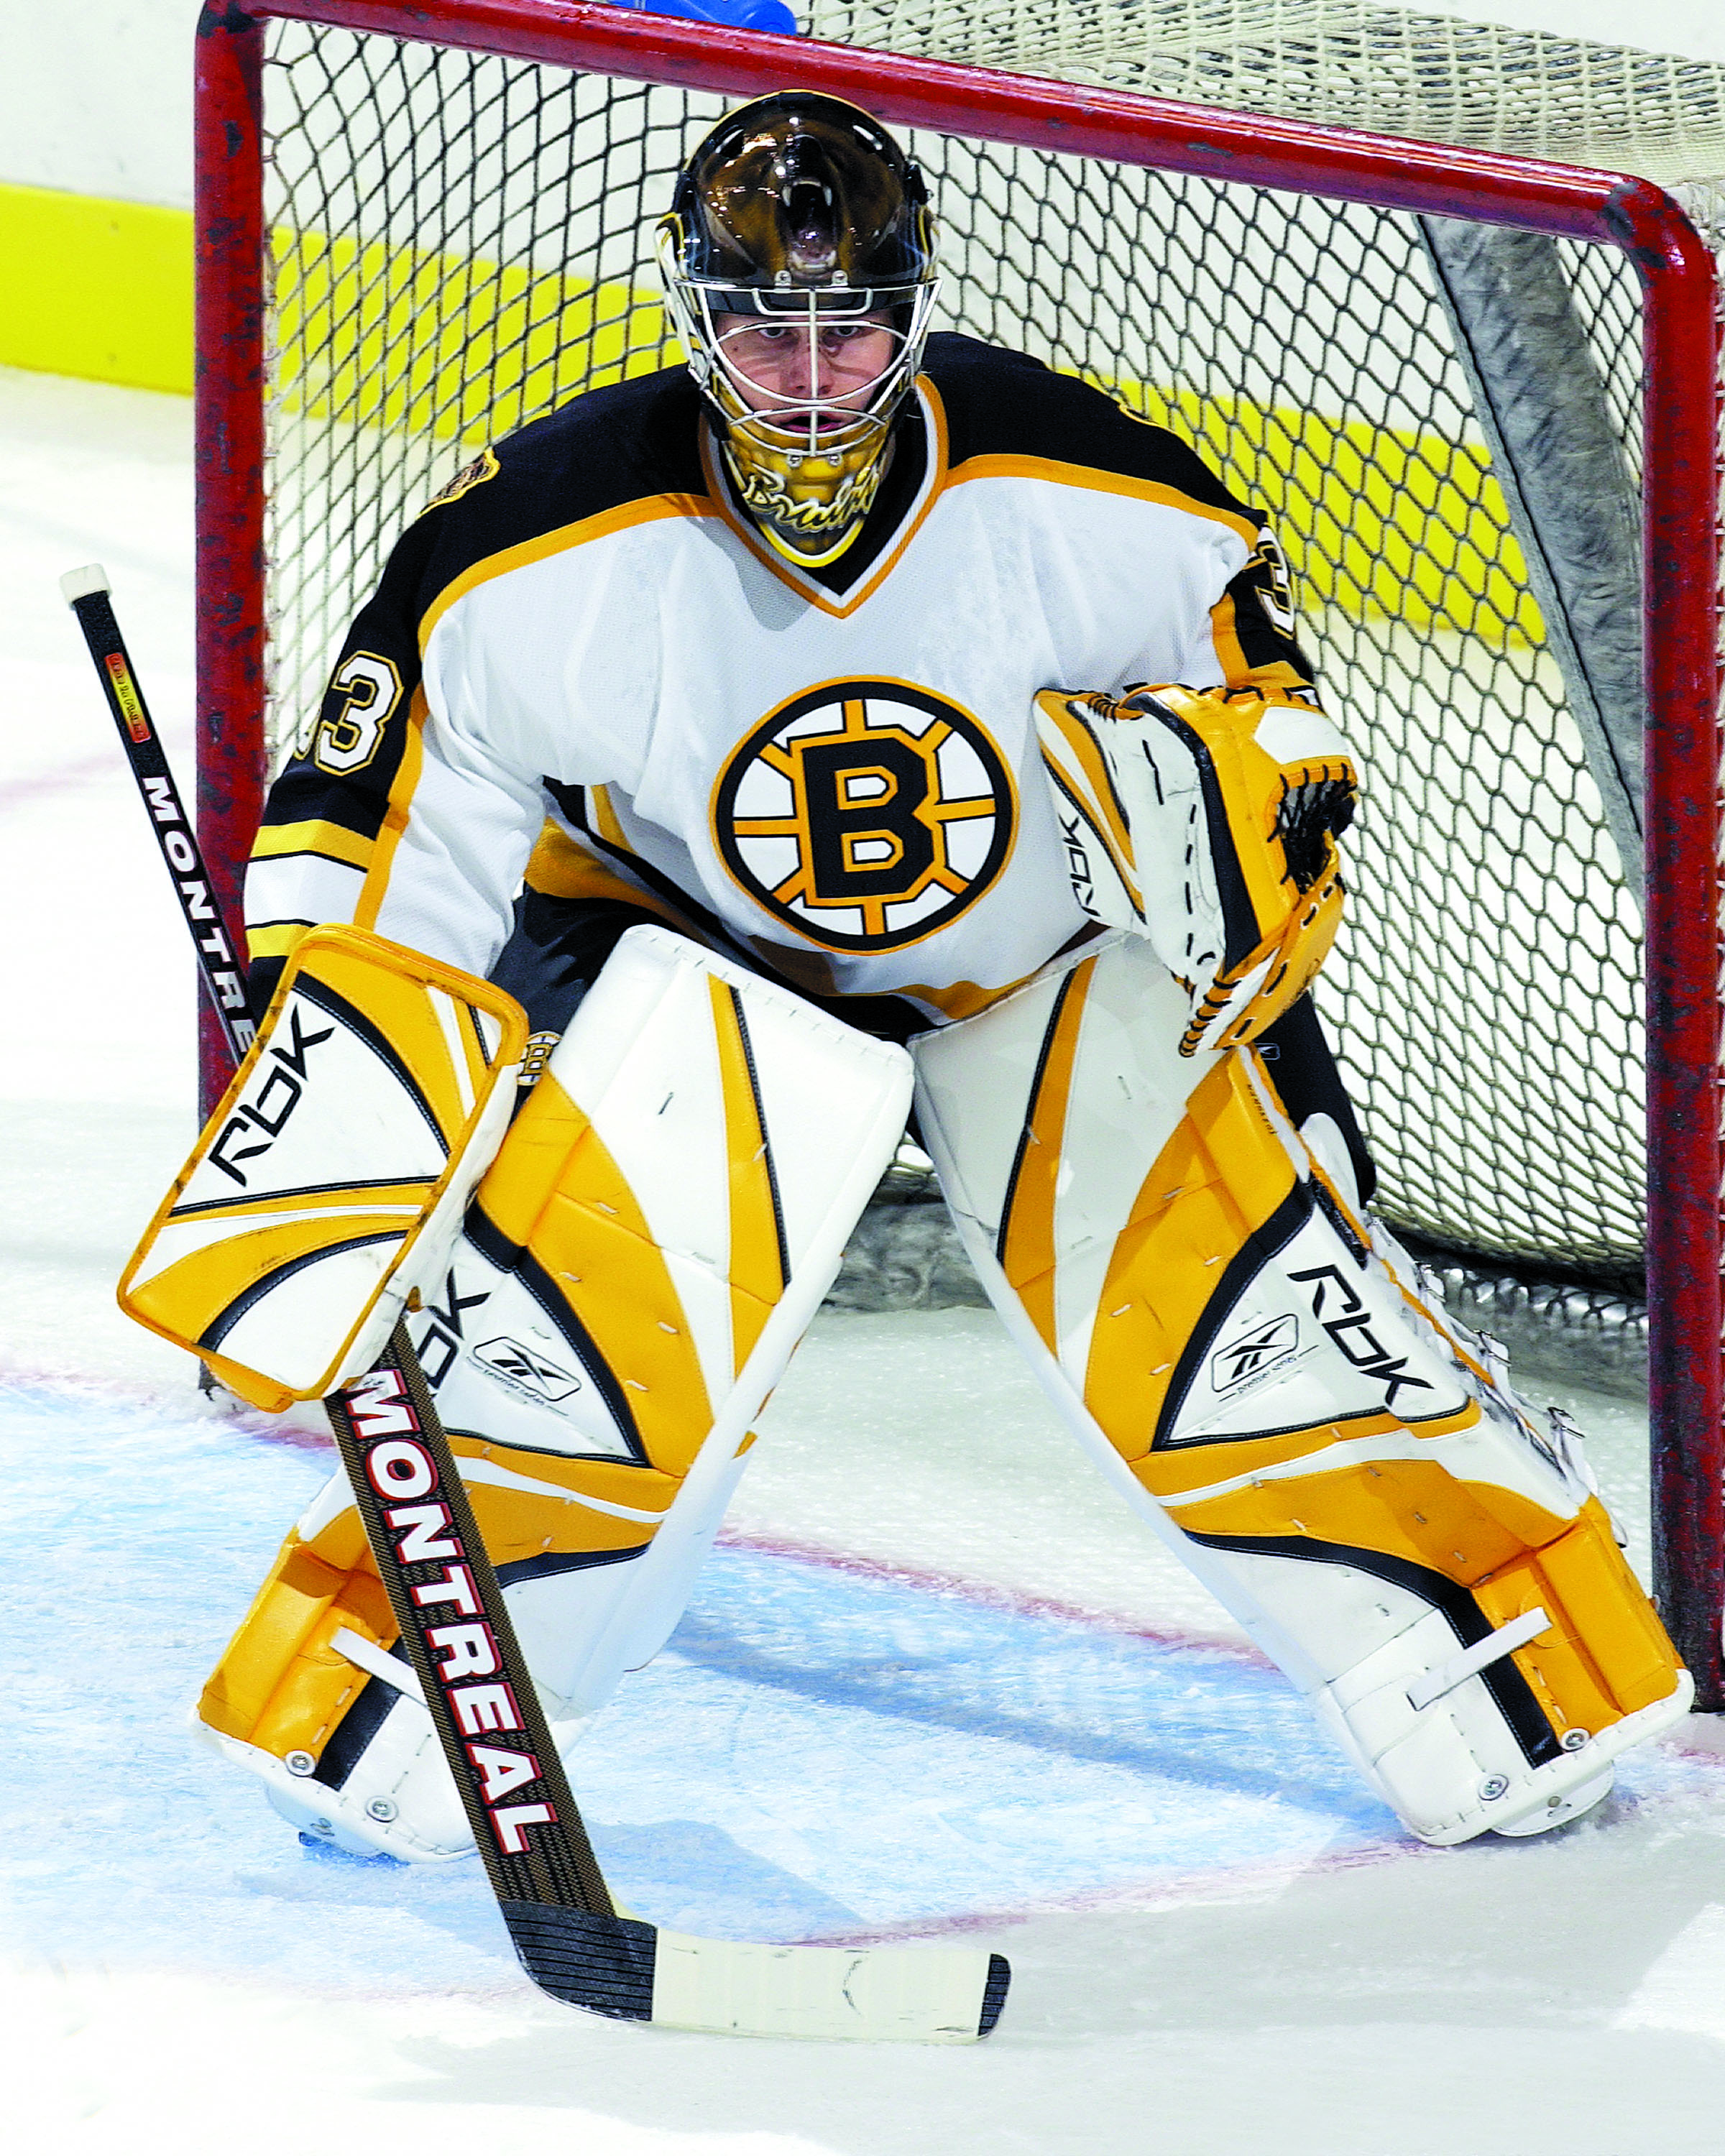 Hockey Goalie Helmet Bruins Images   Pictures   Becuo